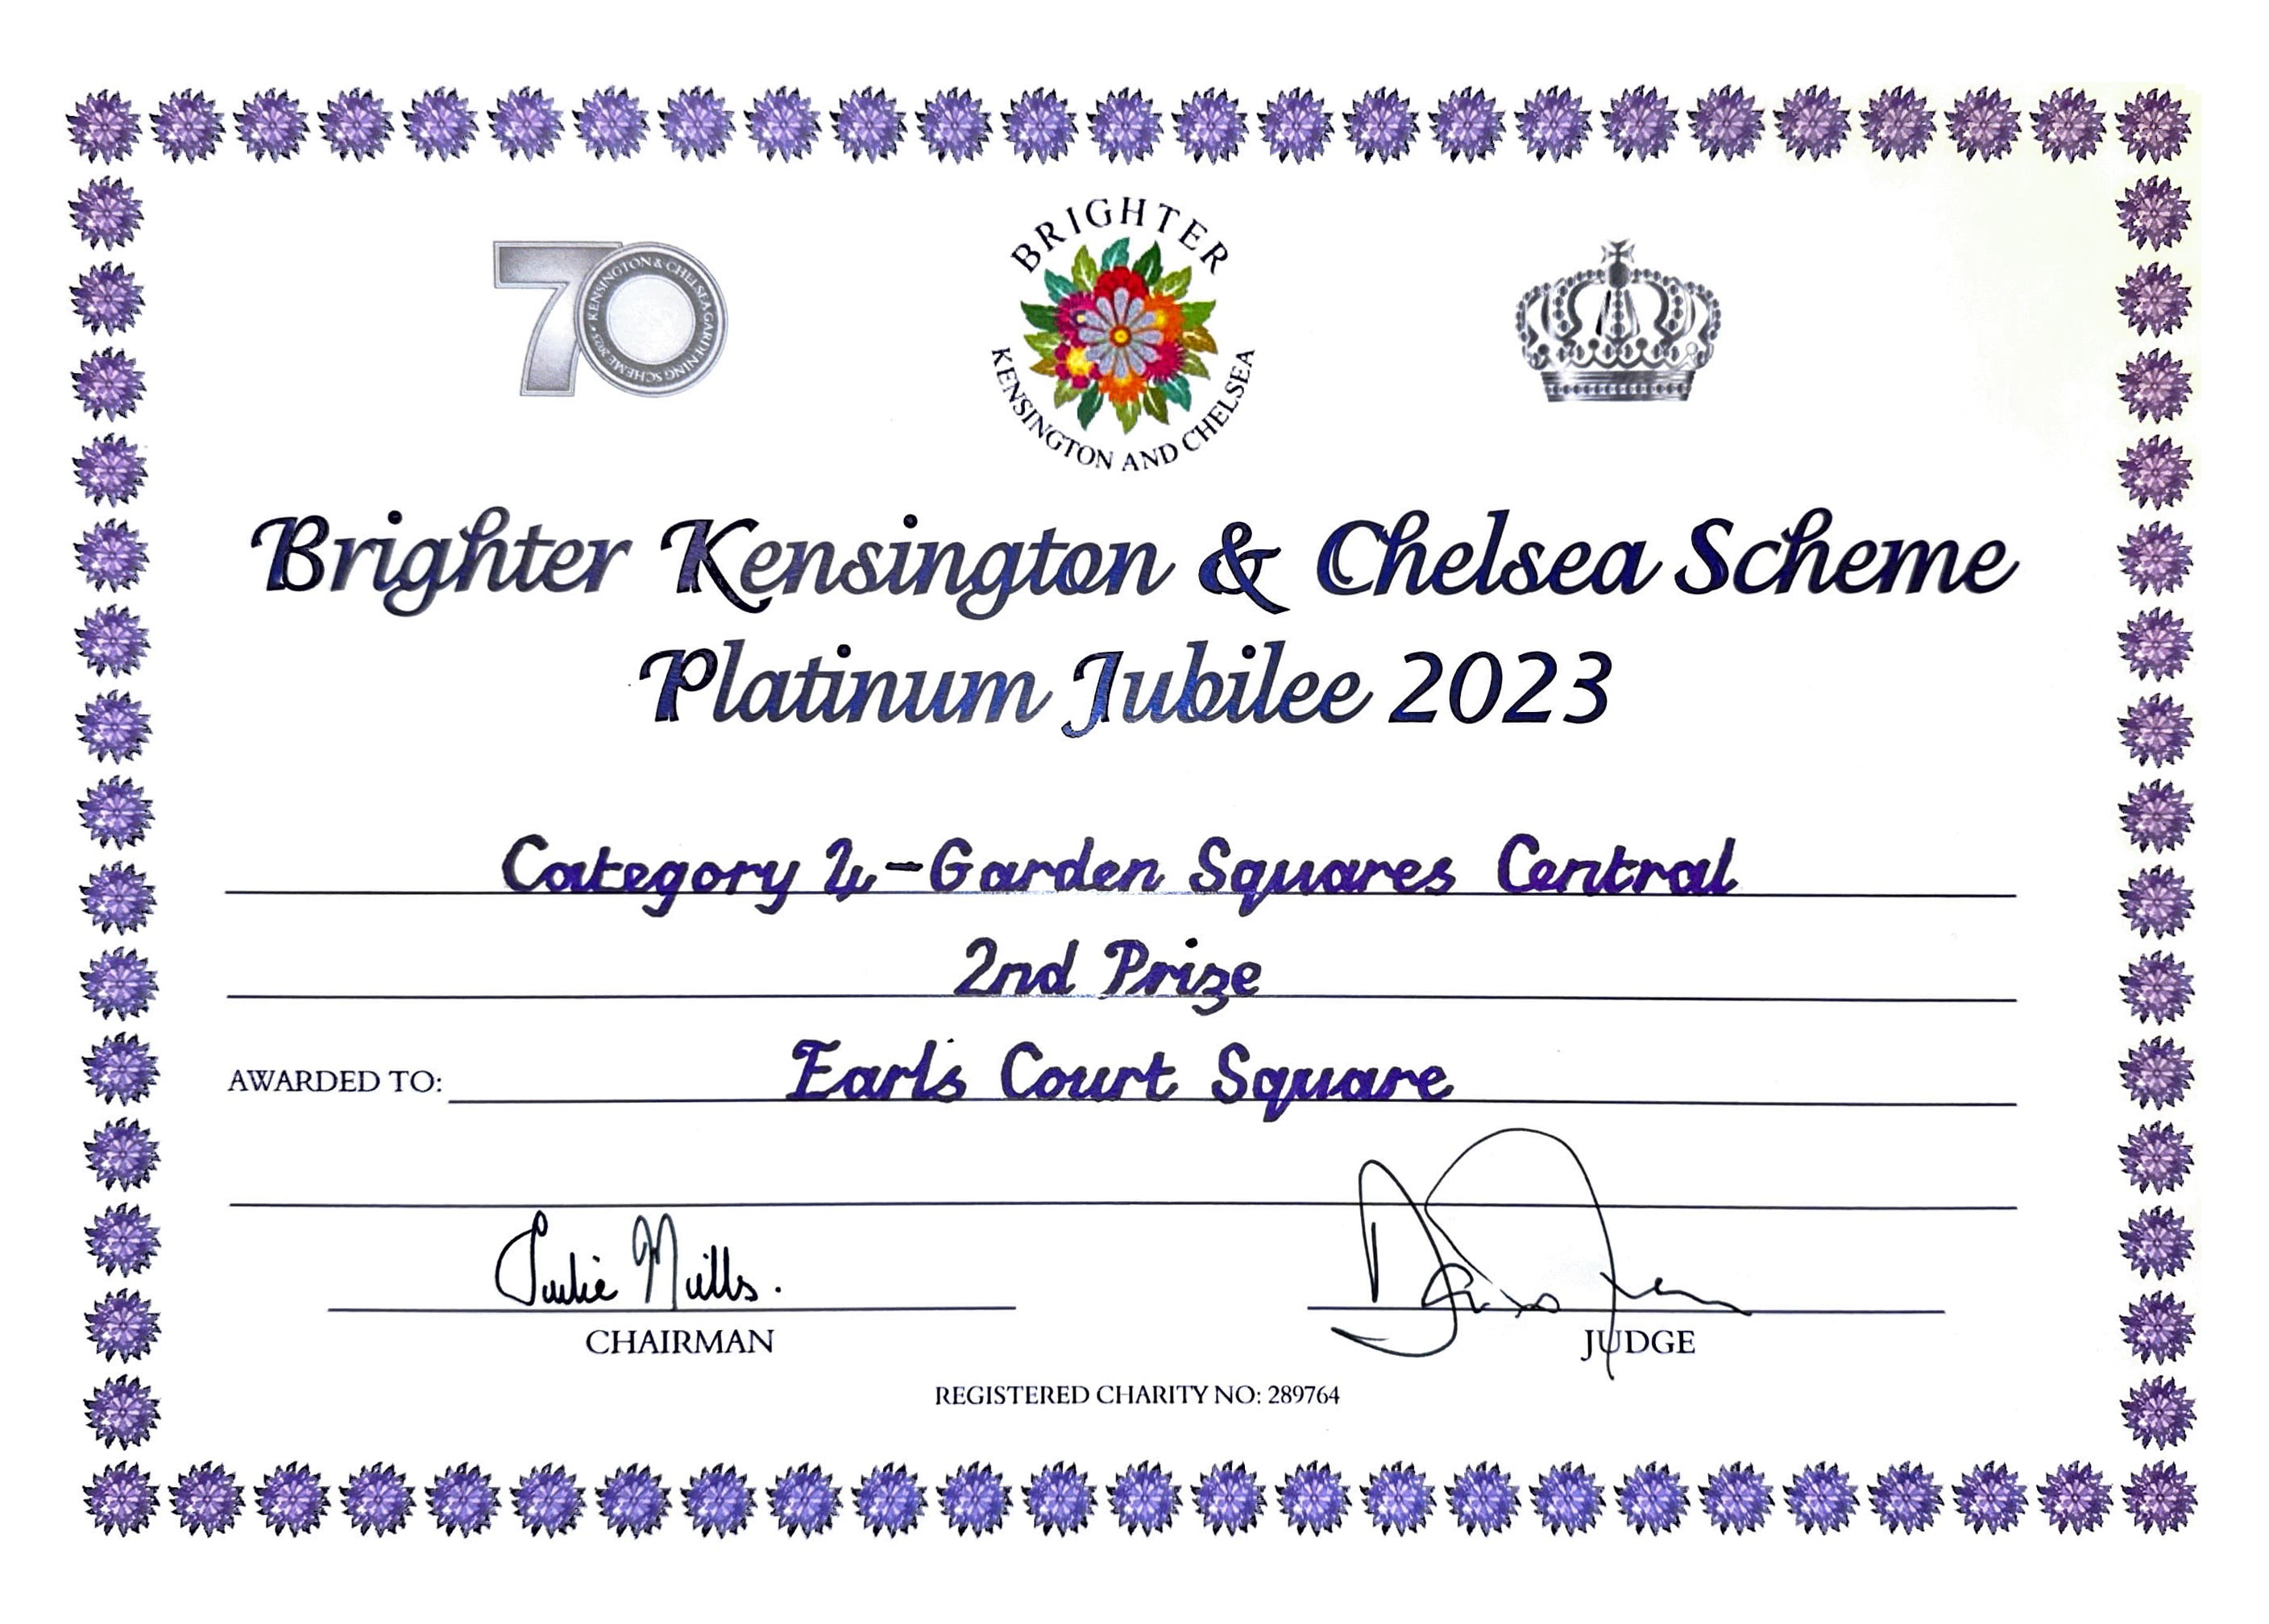 Brighter Kensington & Chelsea Scheme 2023 award certificate